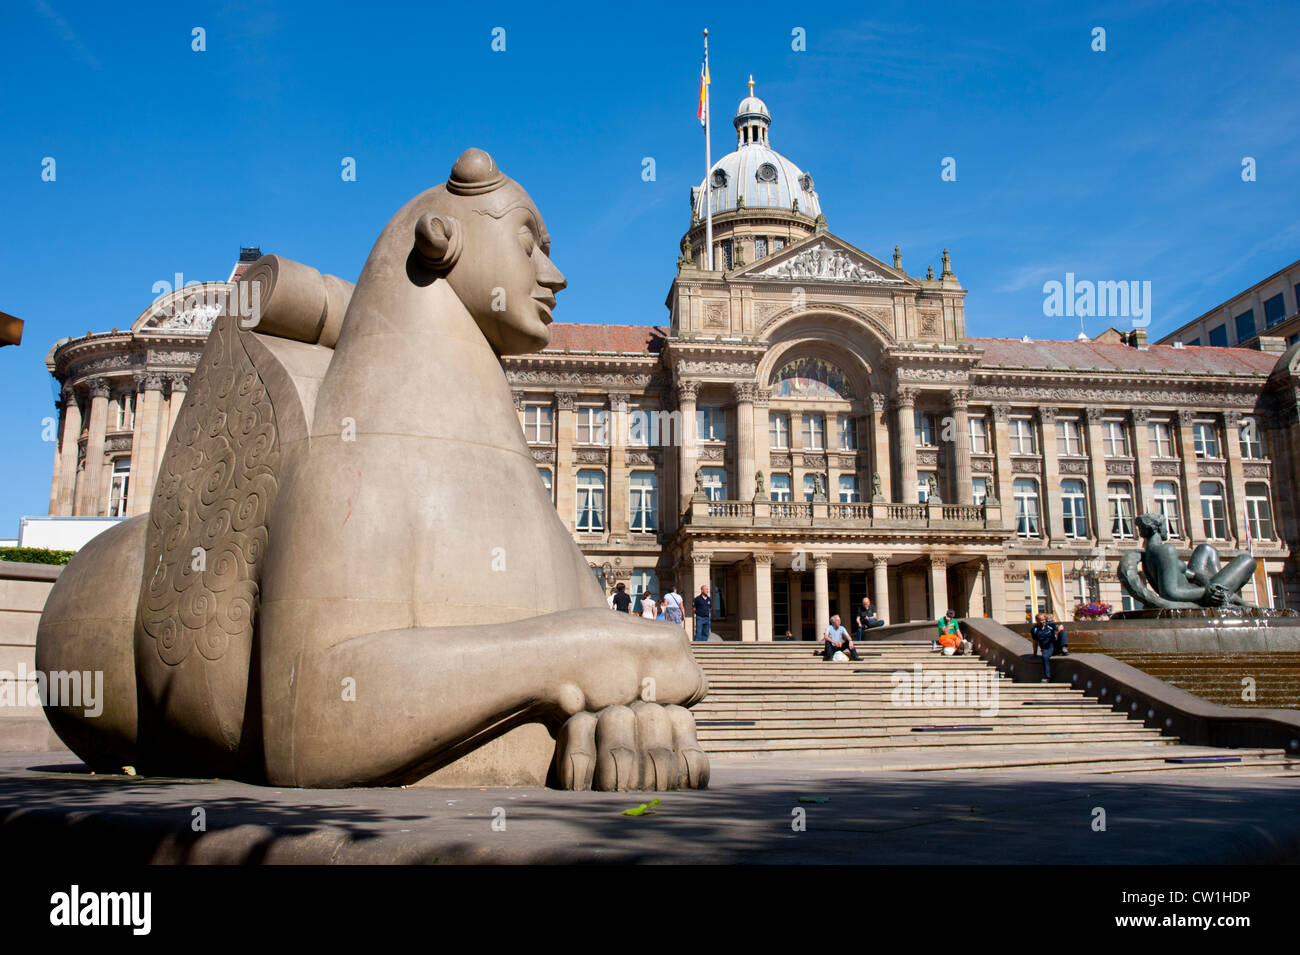 The Guardian statue. The River sculpture and Council House building, Victoria Square, Birmingham city centre. Stock Photo